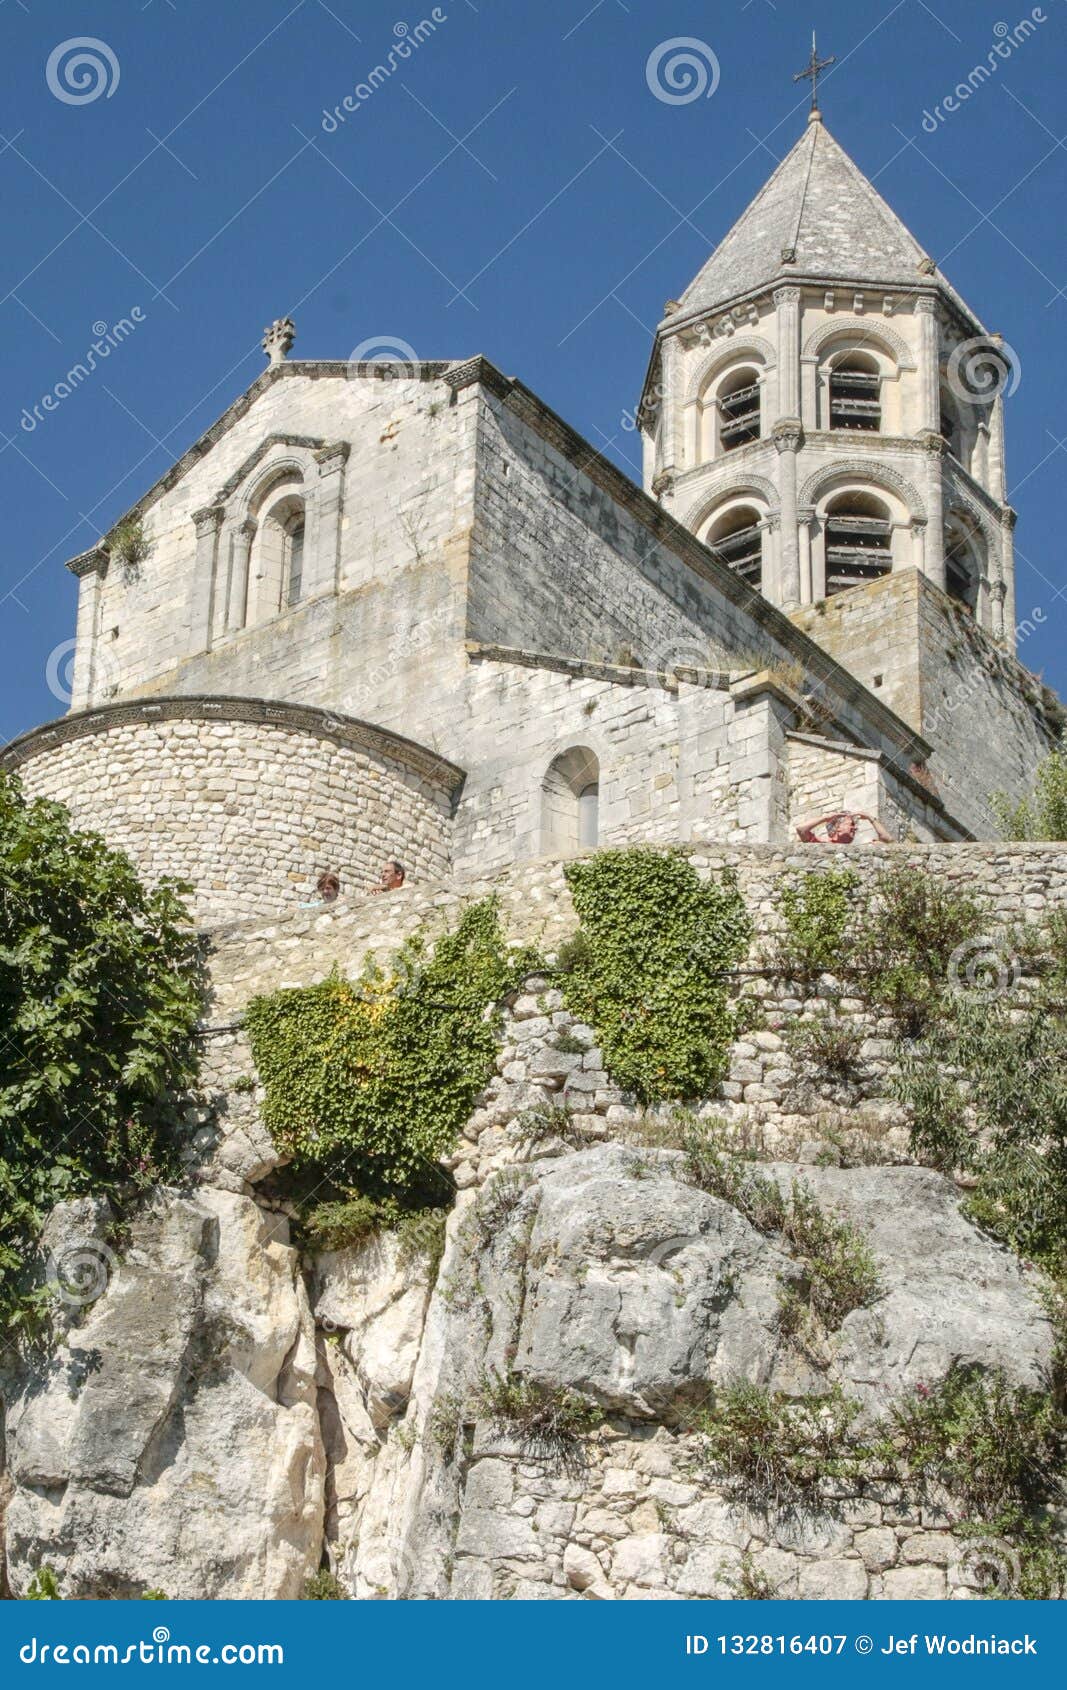 Church in Medieval Village of La Garde Adhemar Stock Image - Image of